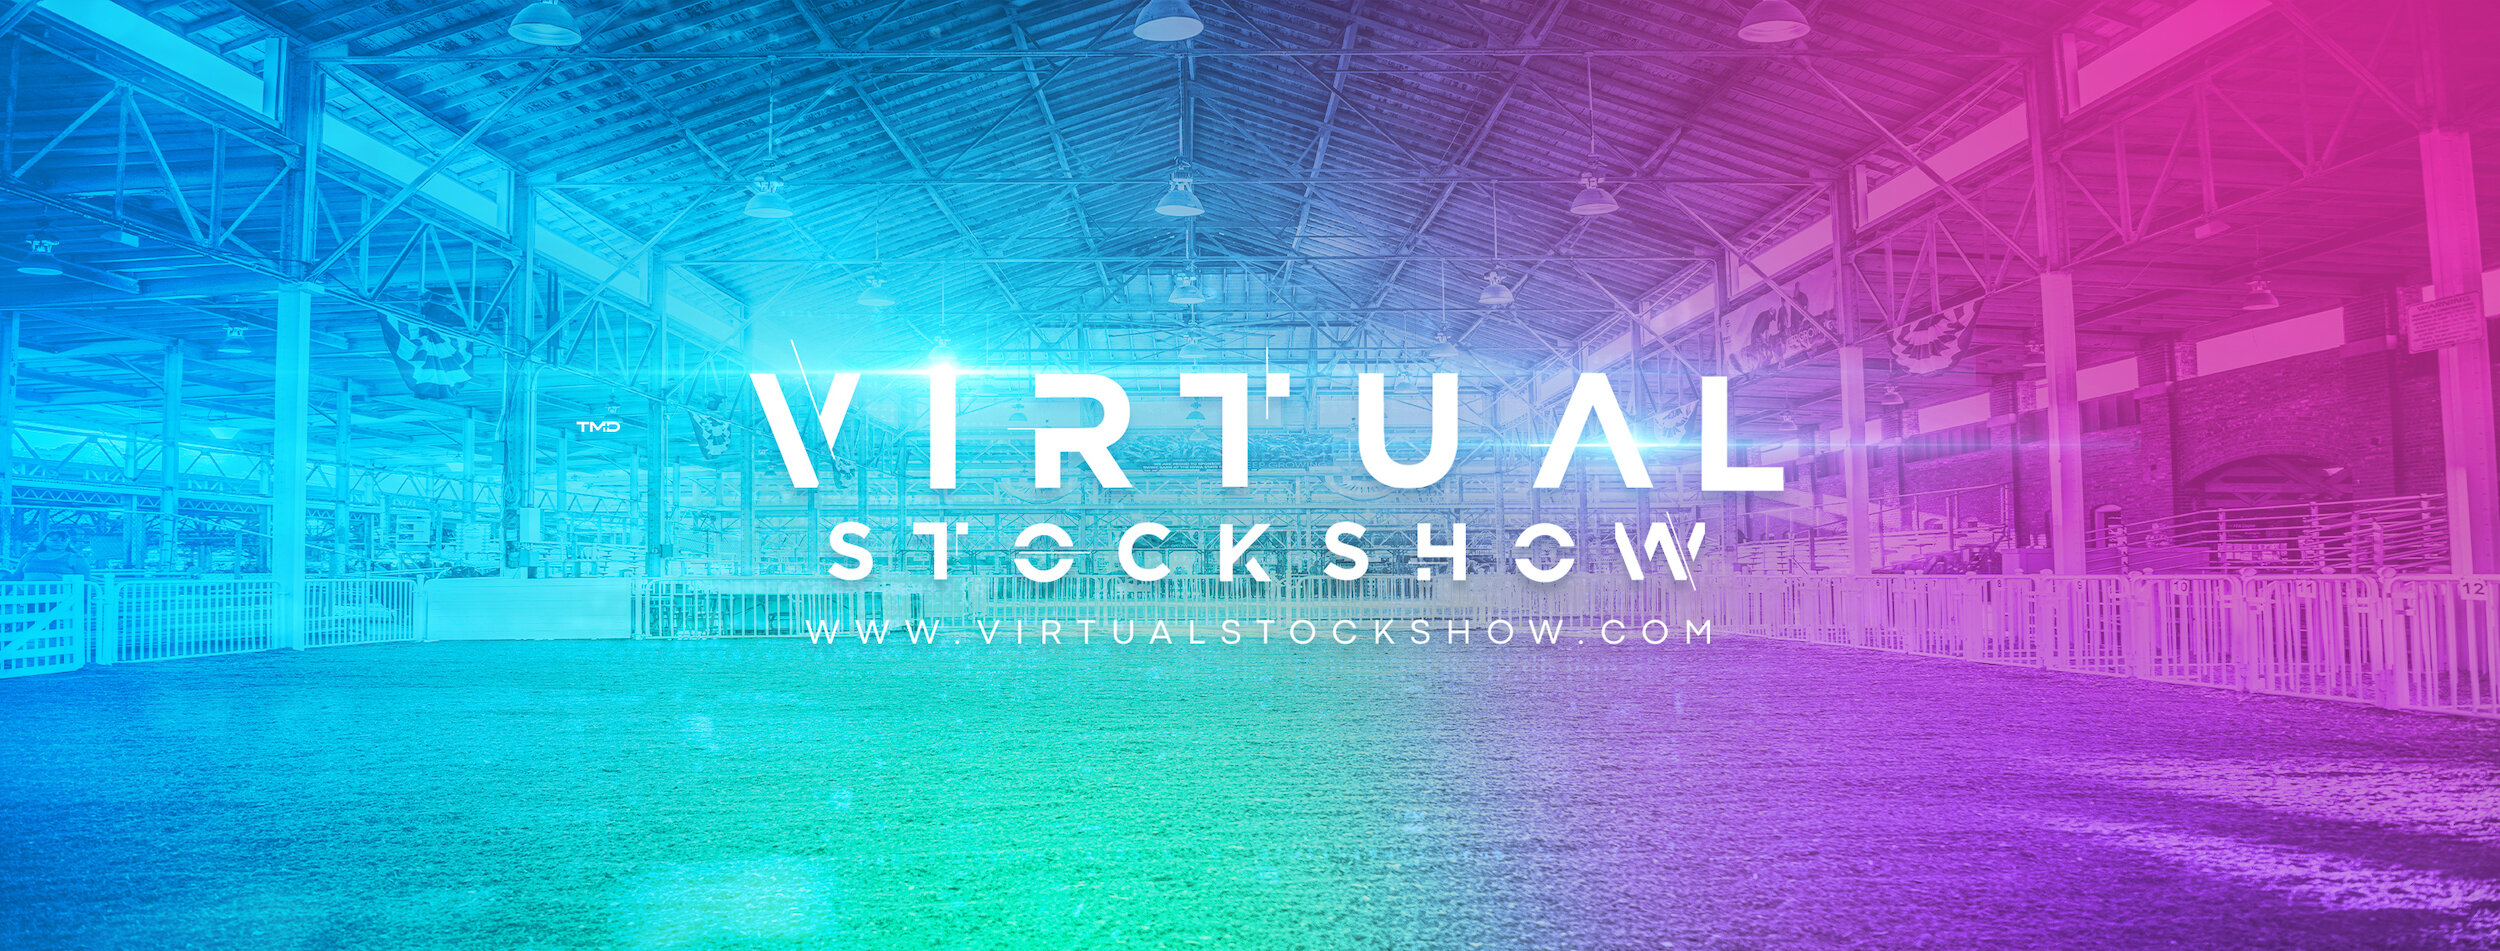 Virtual Stockshow